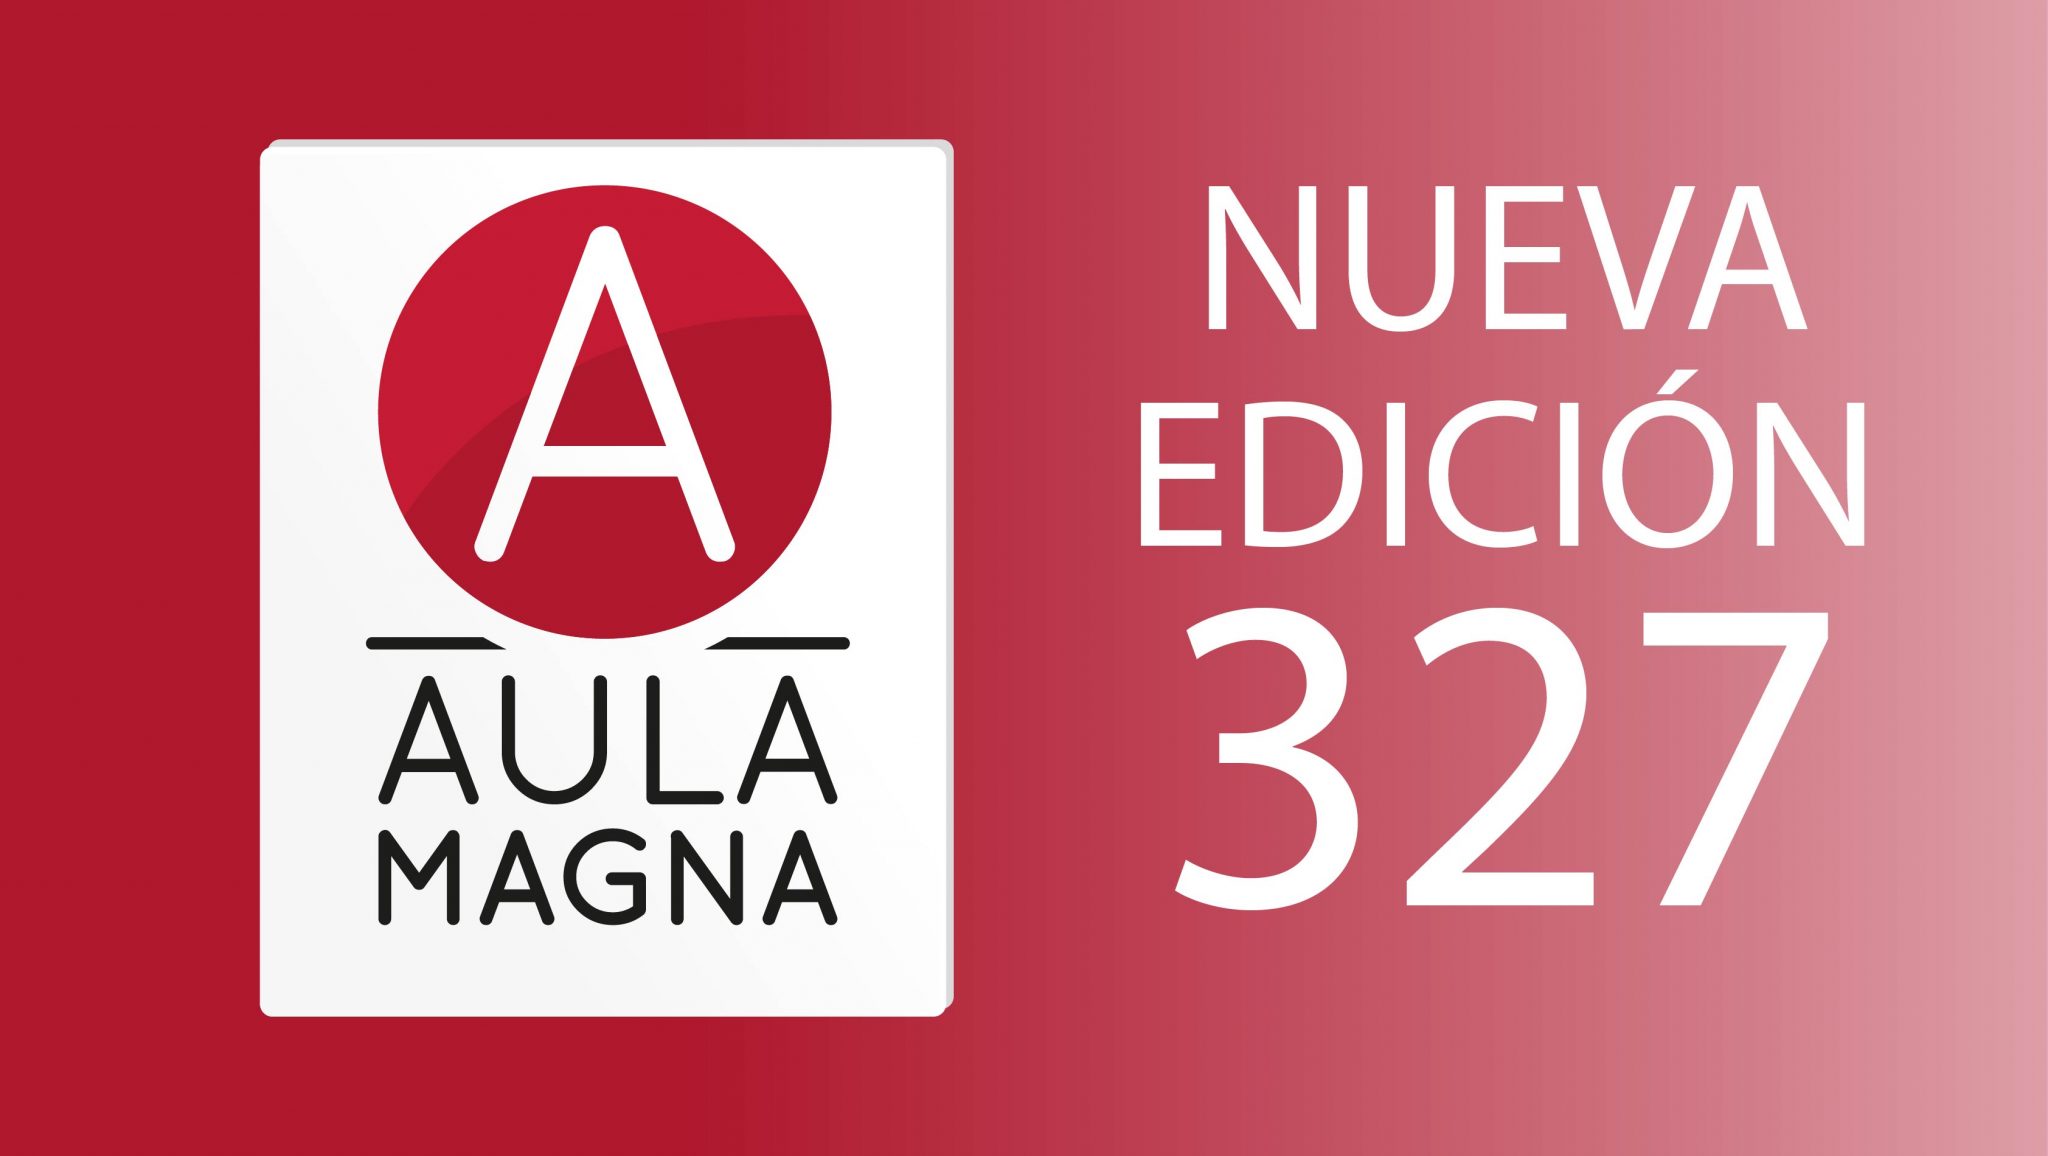 edición Aula Magna local 327 aperturas de curso en las universidades